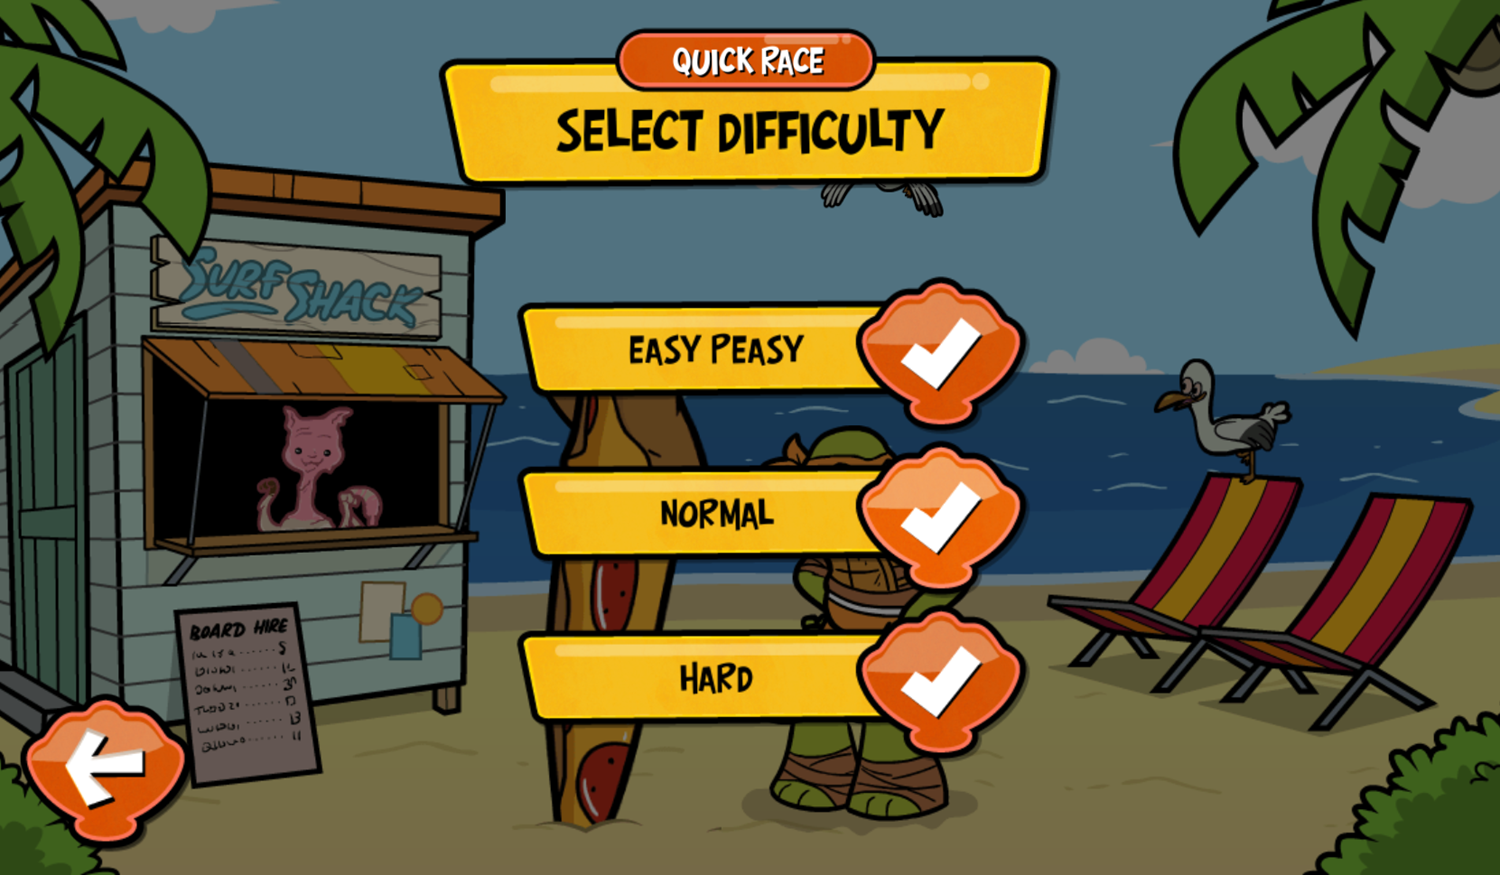 Nick Surfs Up Select Difficulty Screenshot.